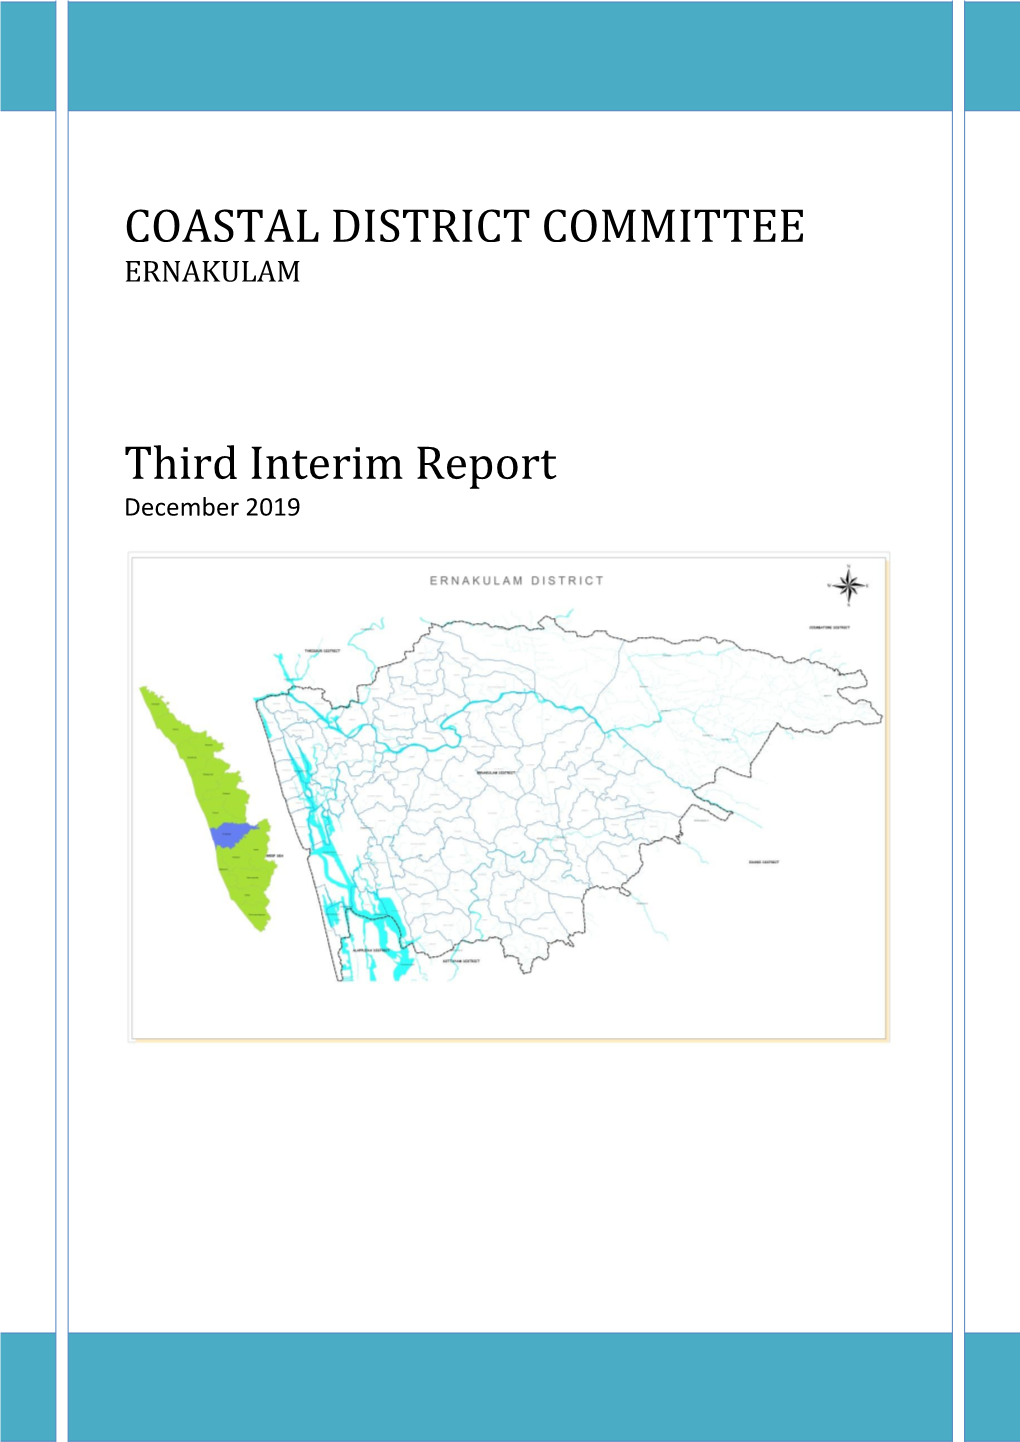 COASTAL DISTRICT COMMITTEE Third Interim Report